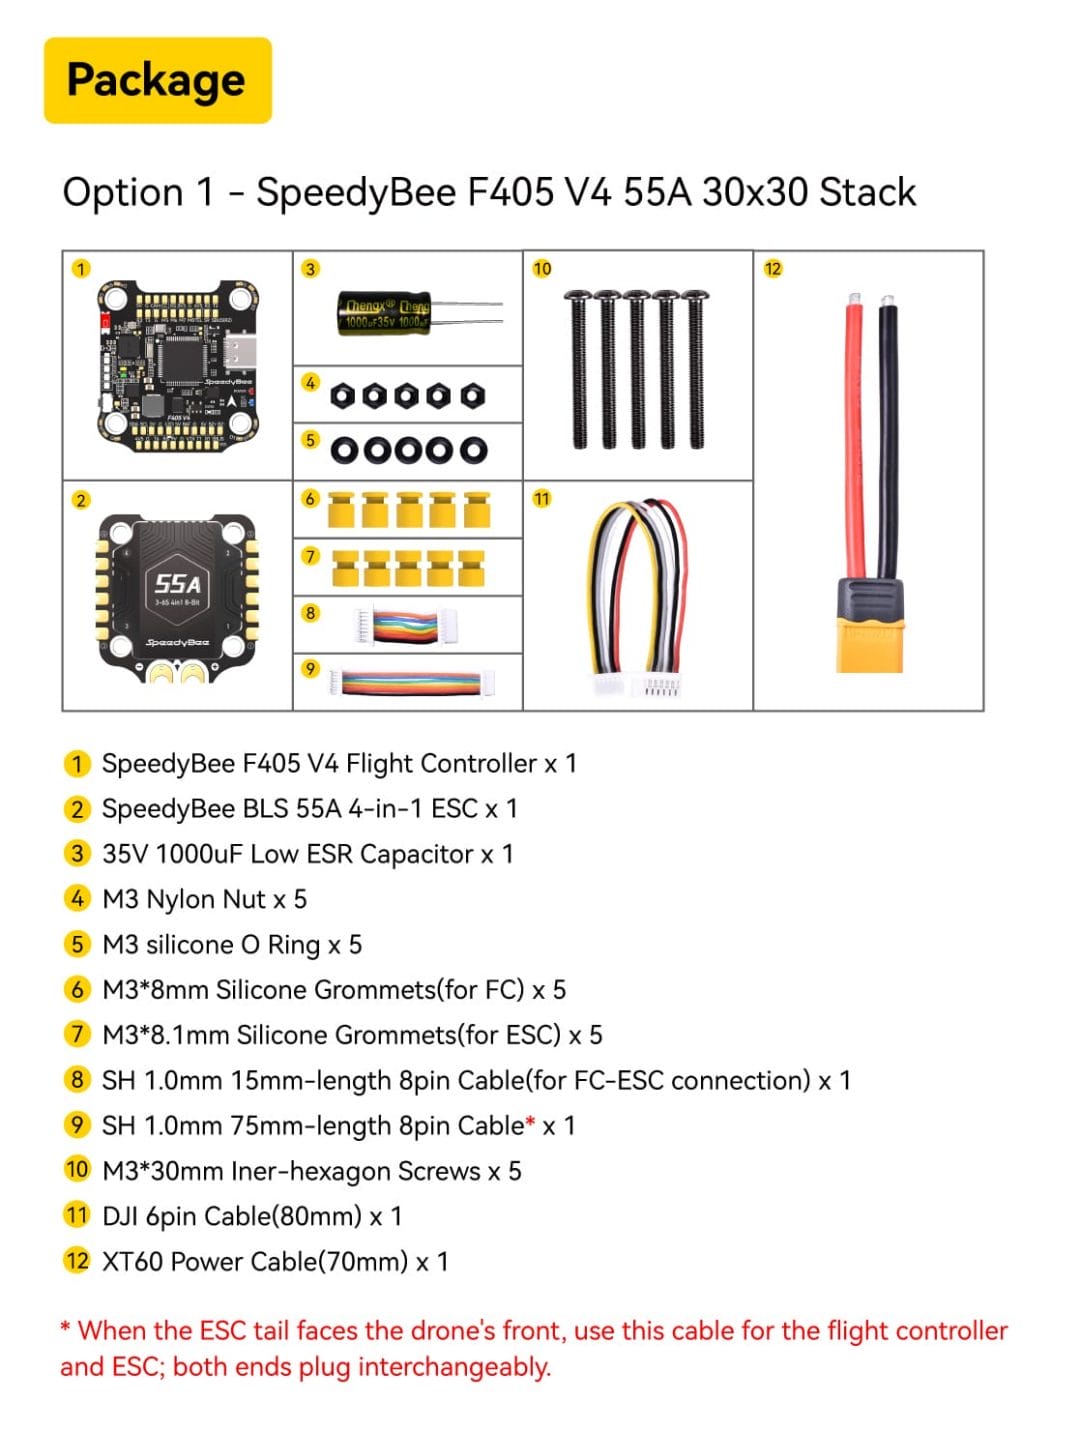 speedybee f405 v4 bls 55a 30x30 stack mantisfpv australia product information description 24